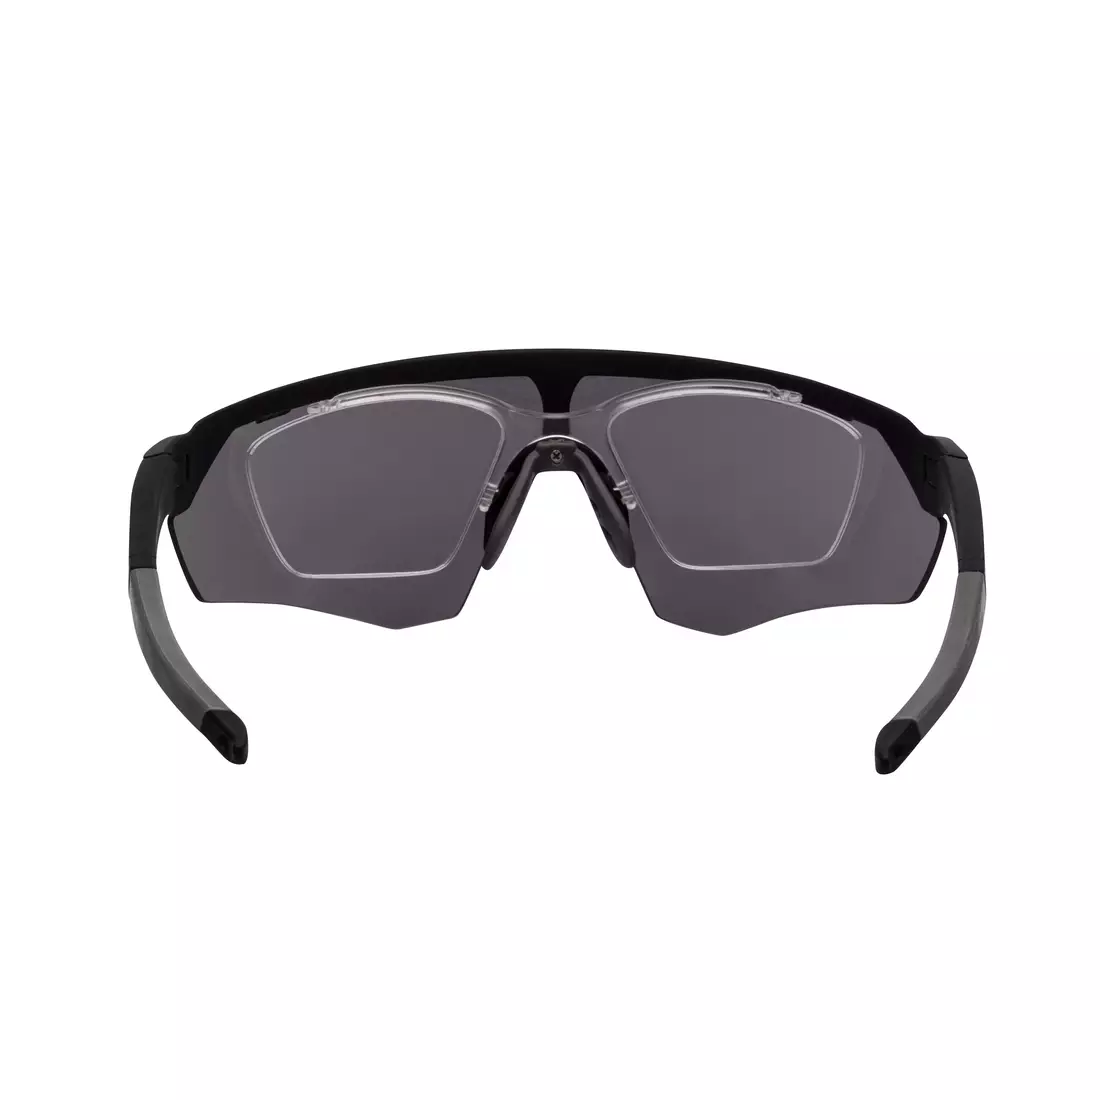 FORCE napszemüveg ENIGMA black/grey 91160